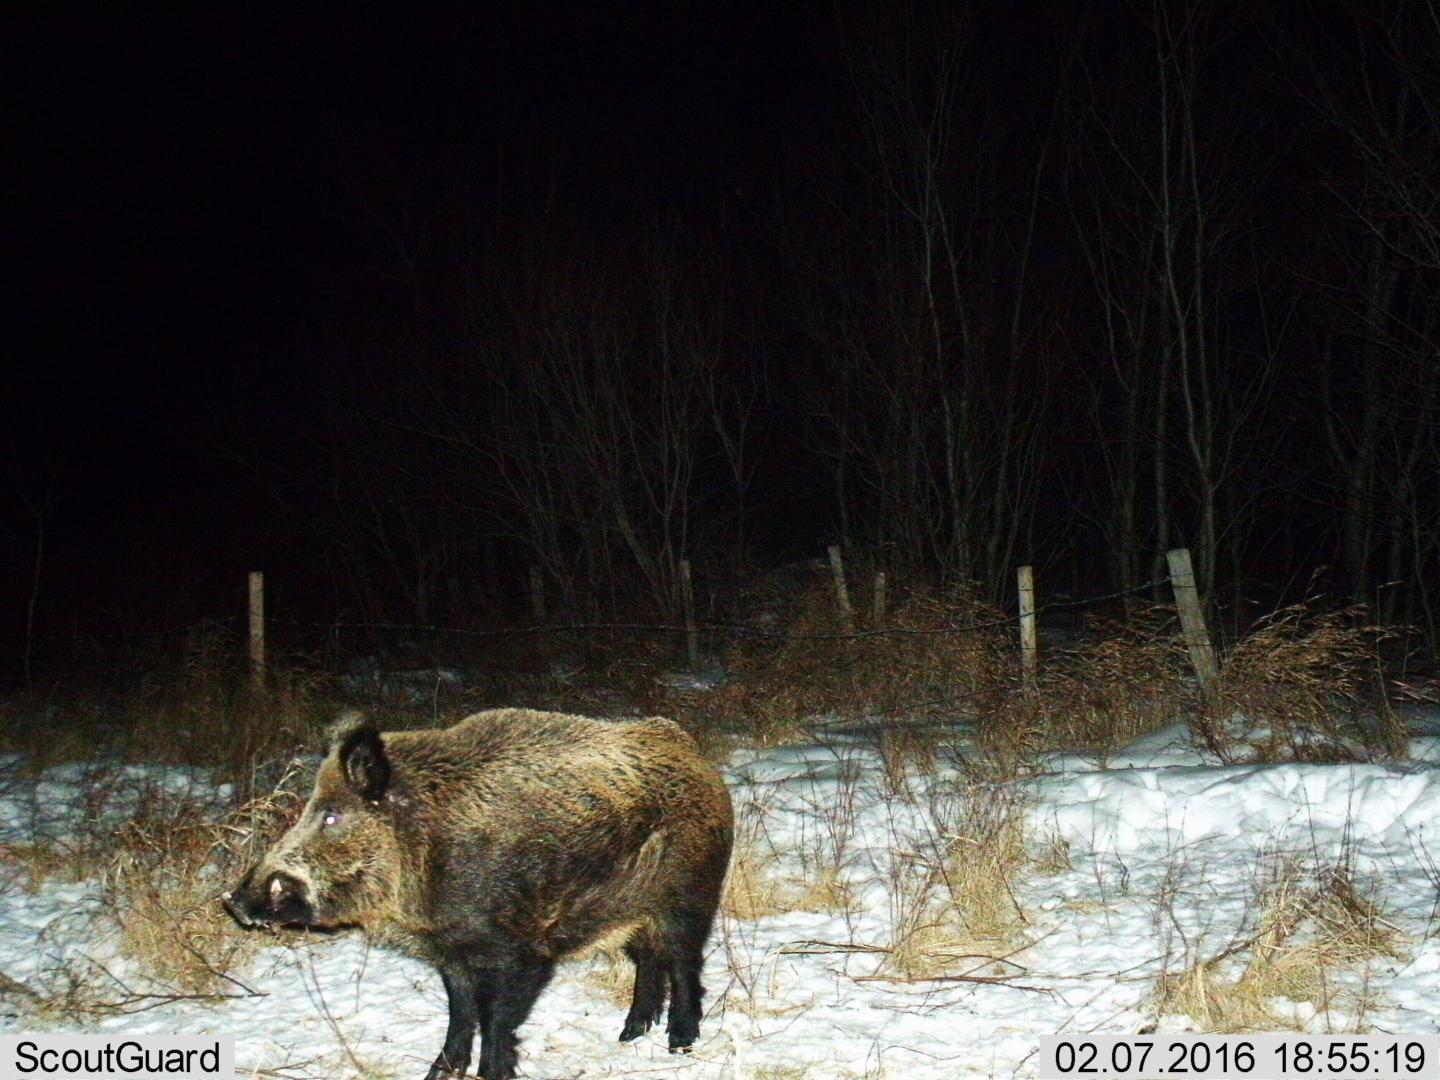 A Mature Adult Wild Pig in Saskatchewan, Canada